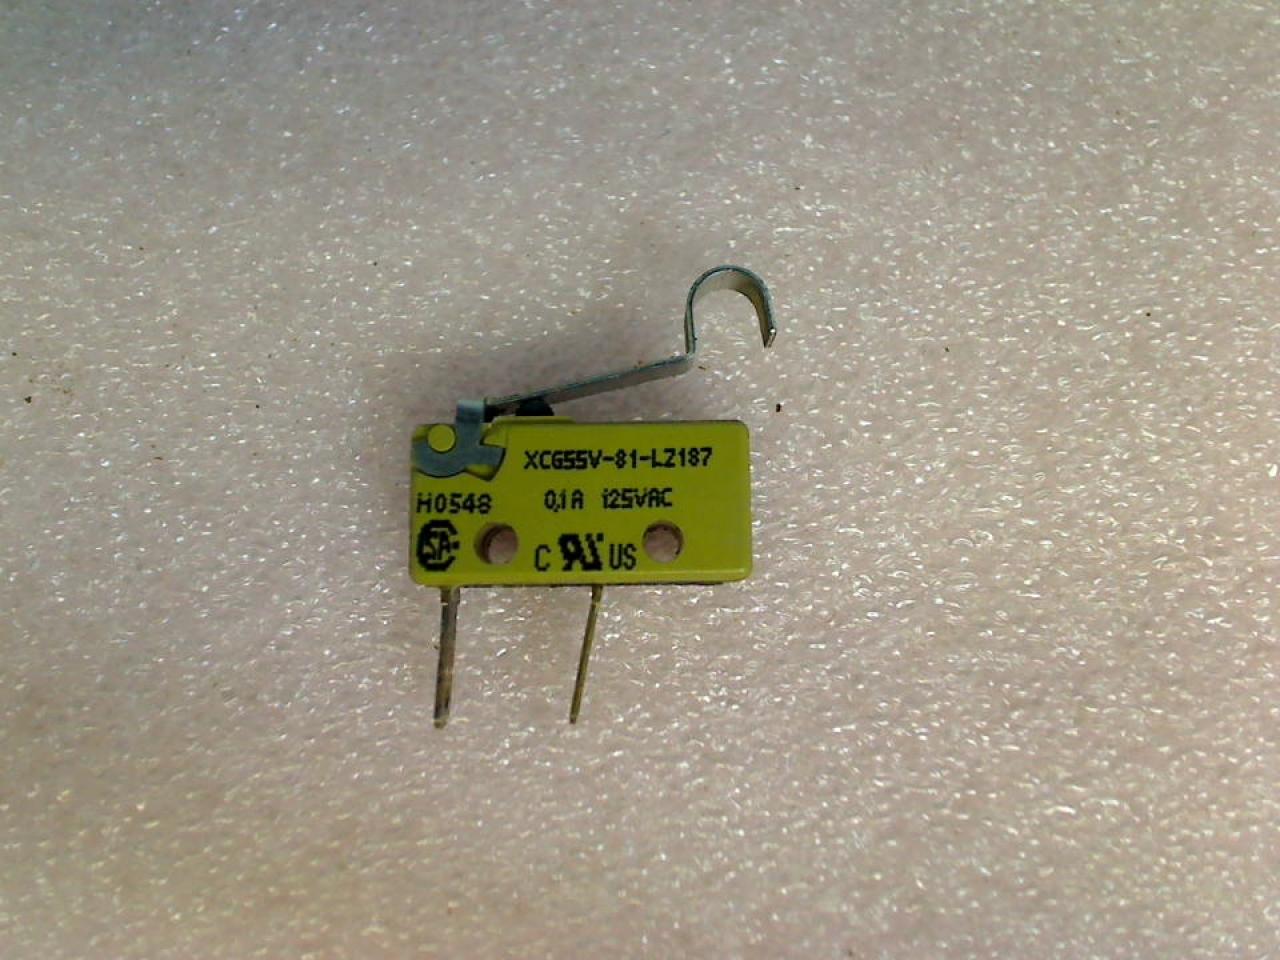 Micro Switch Sensor Schalter XCG55V-81-LZ187 Surpresso S60